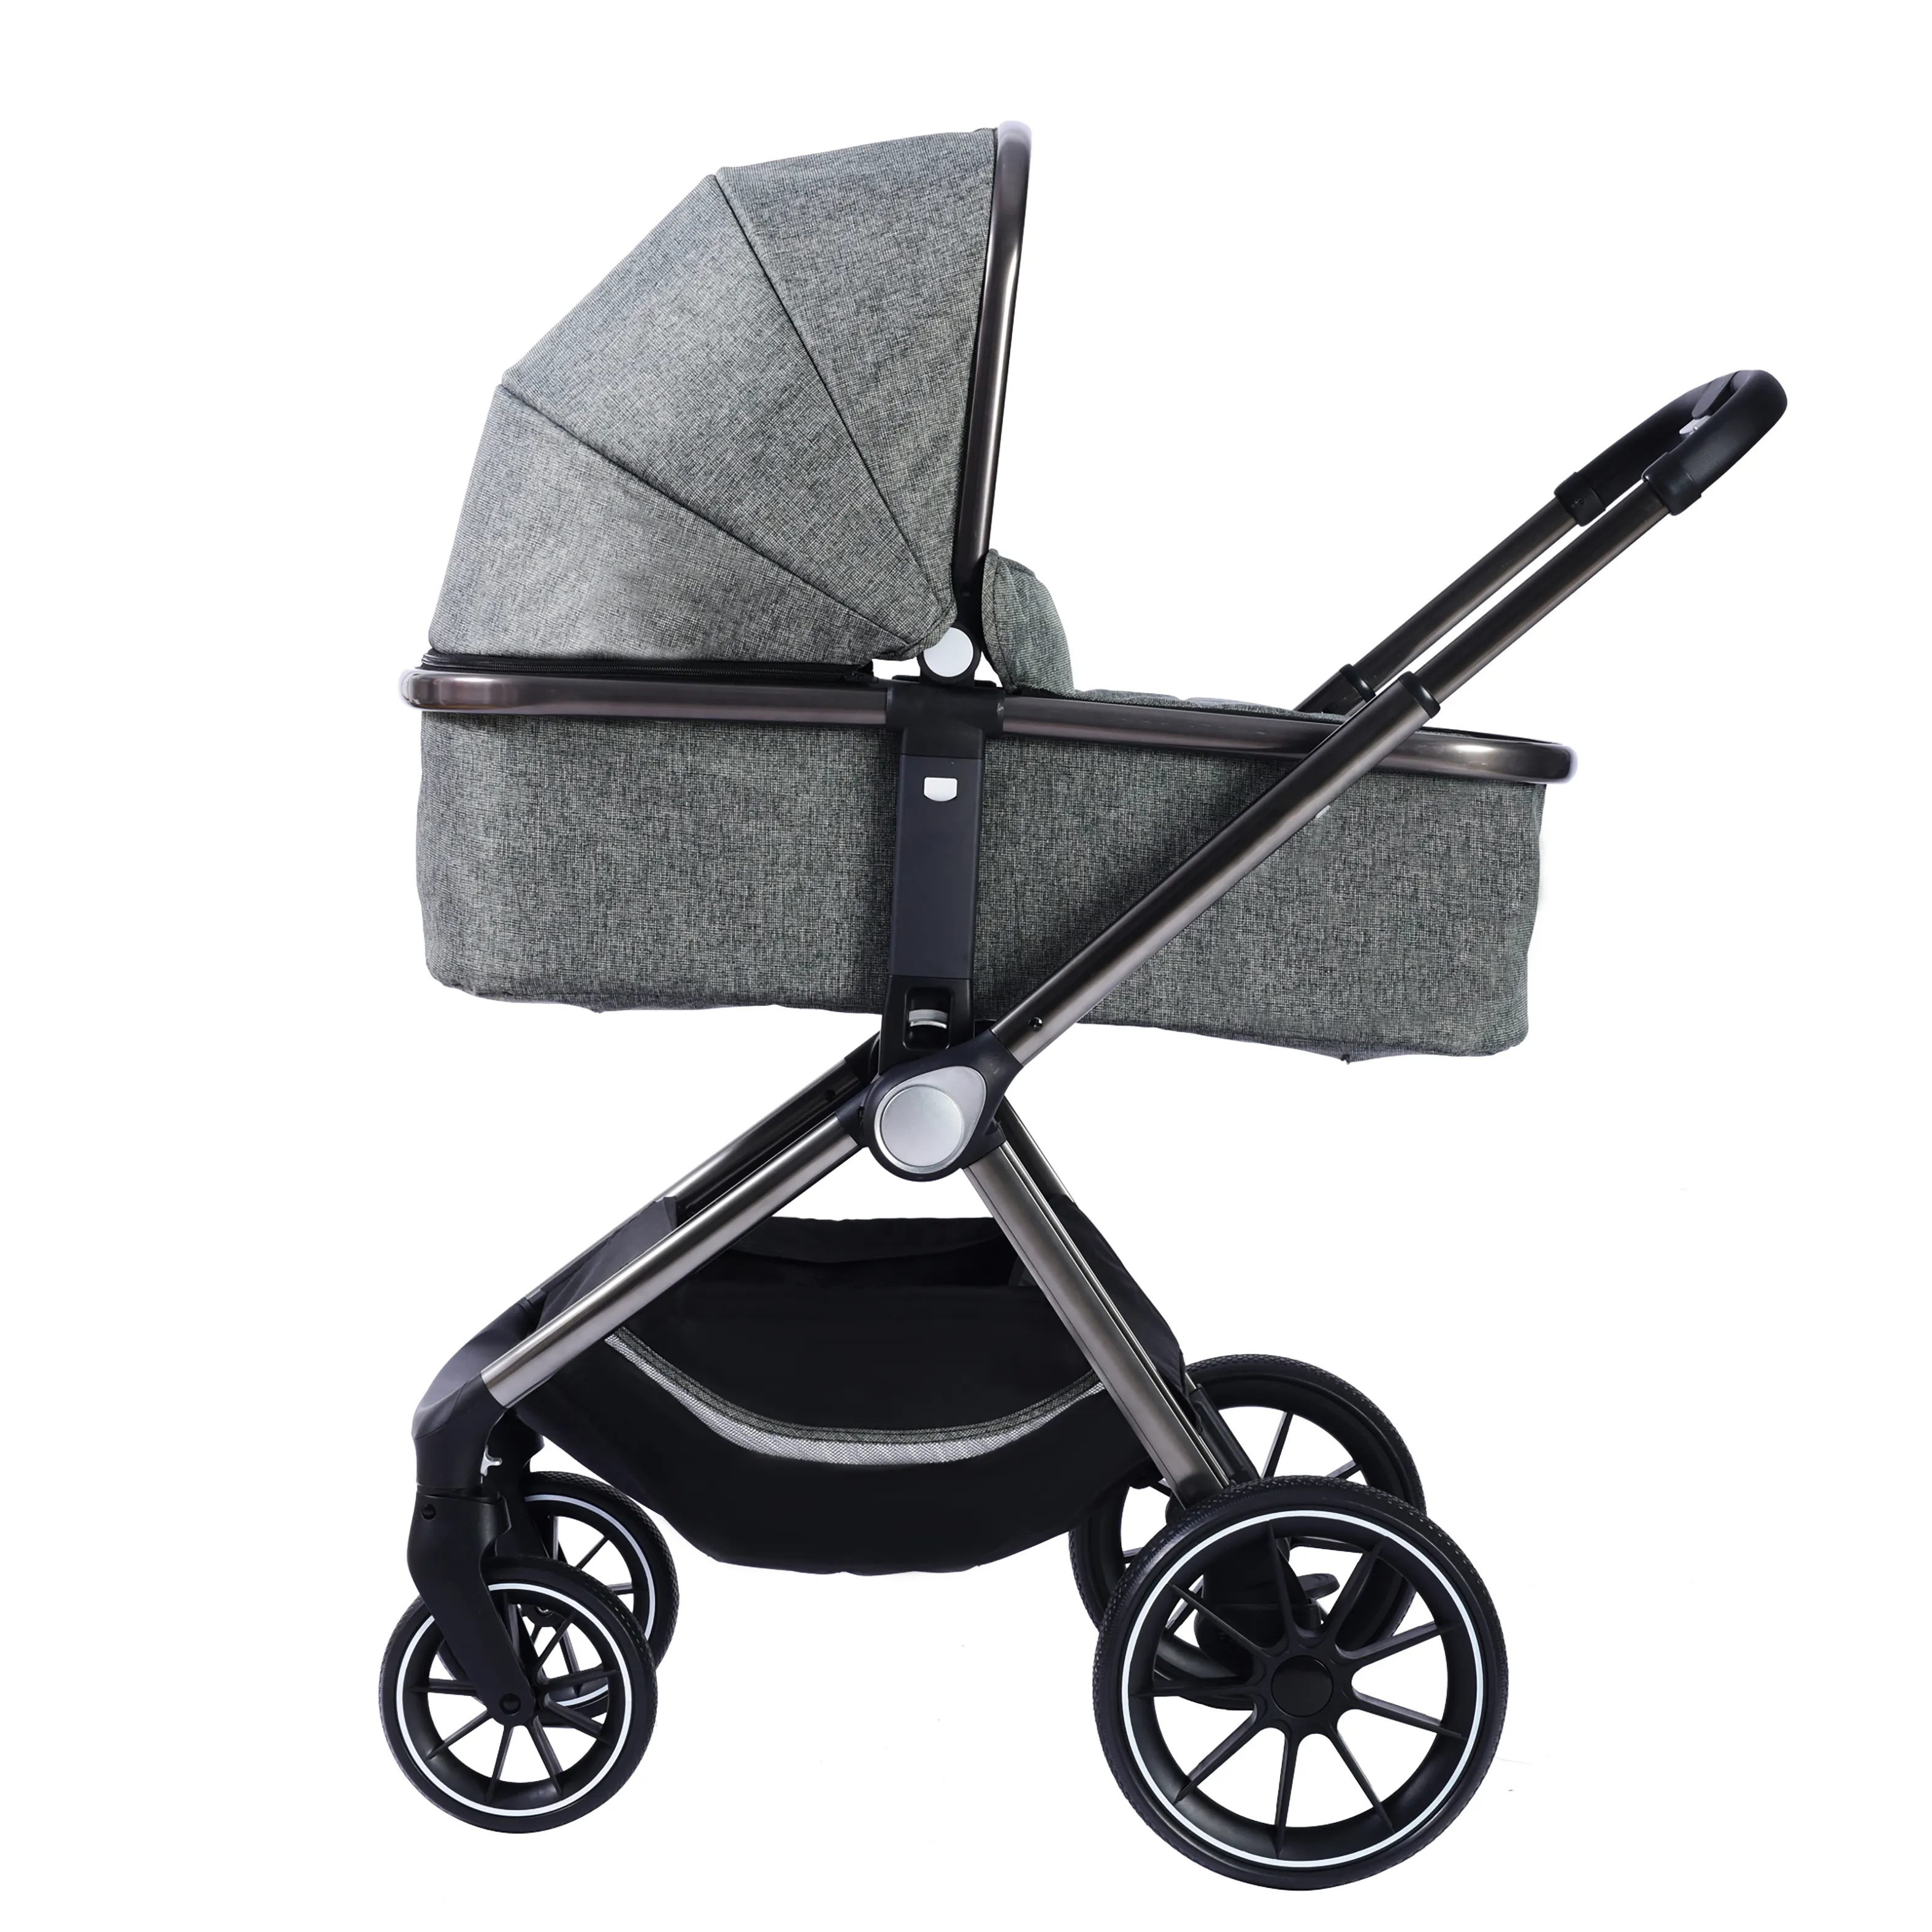 Portable Folding Lightweight Baby Stroller with Adjustable Sunshade Baby Stroller